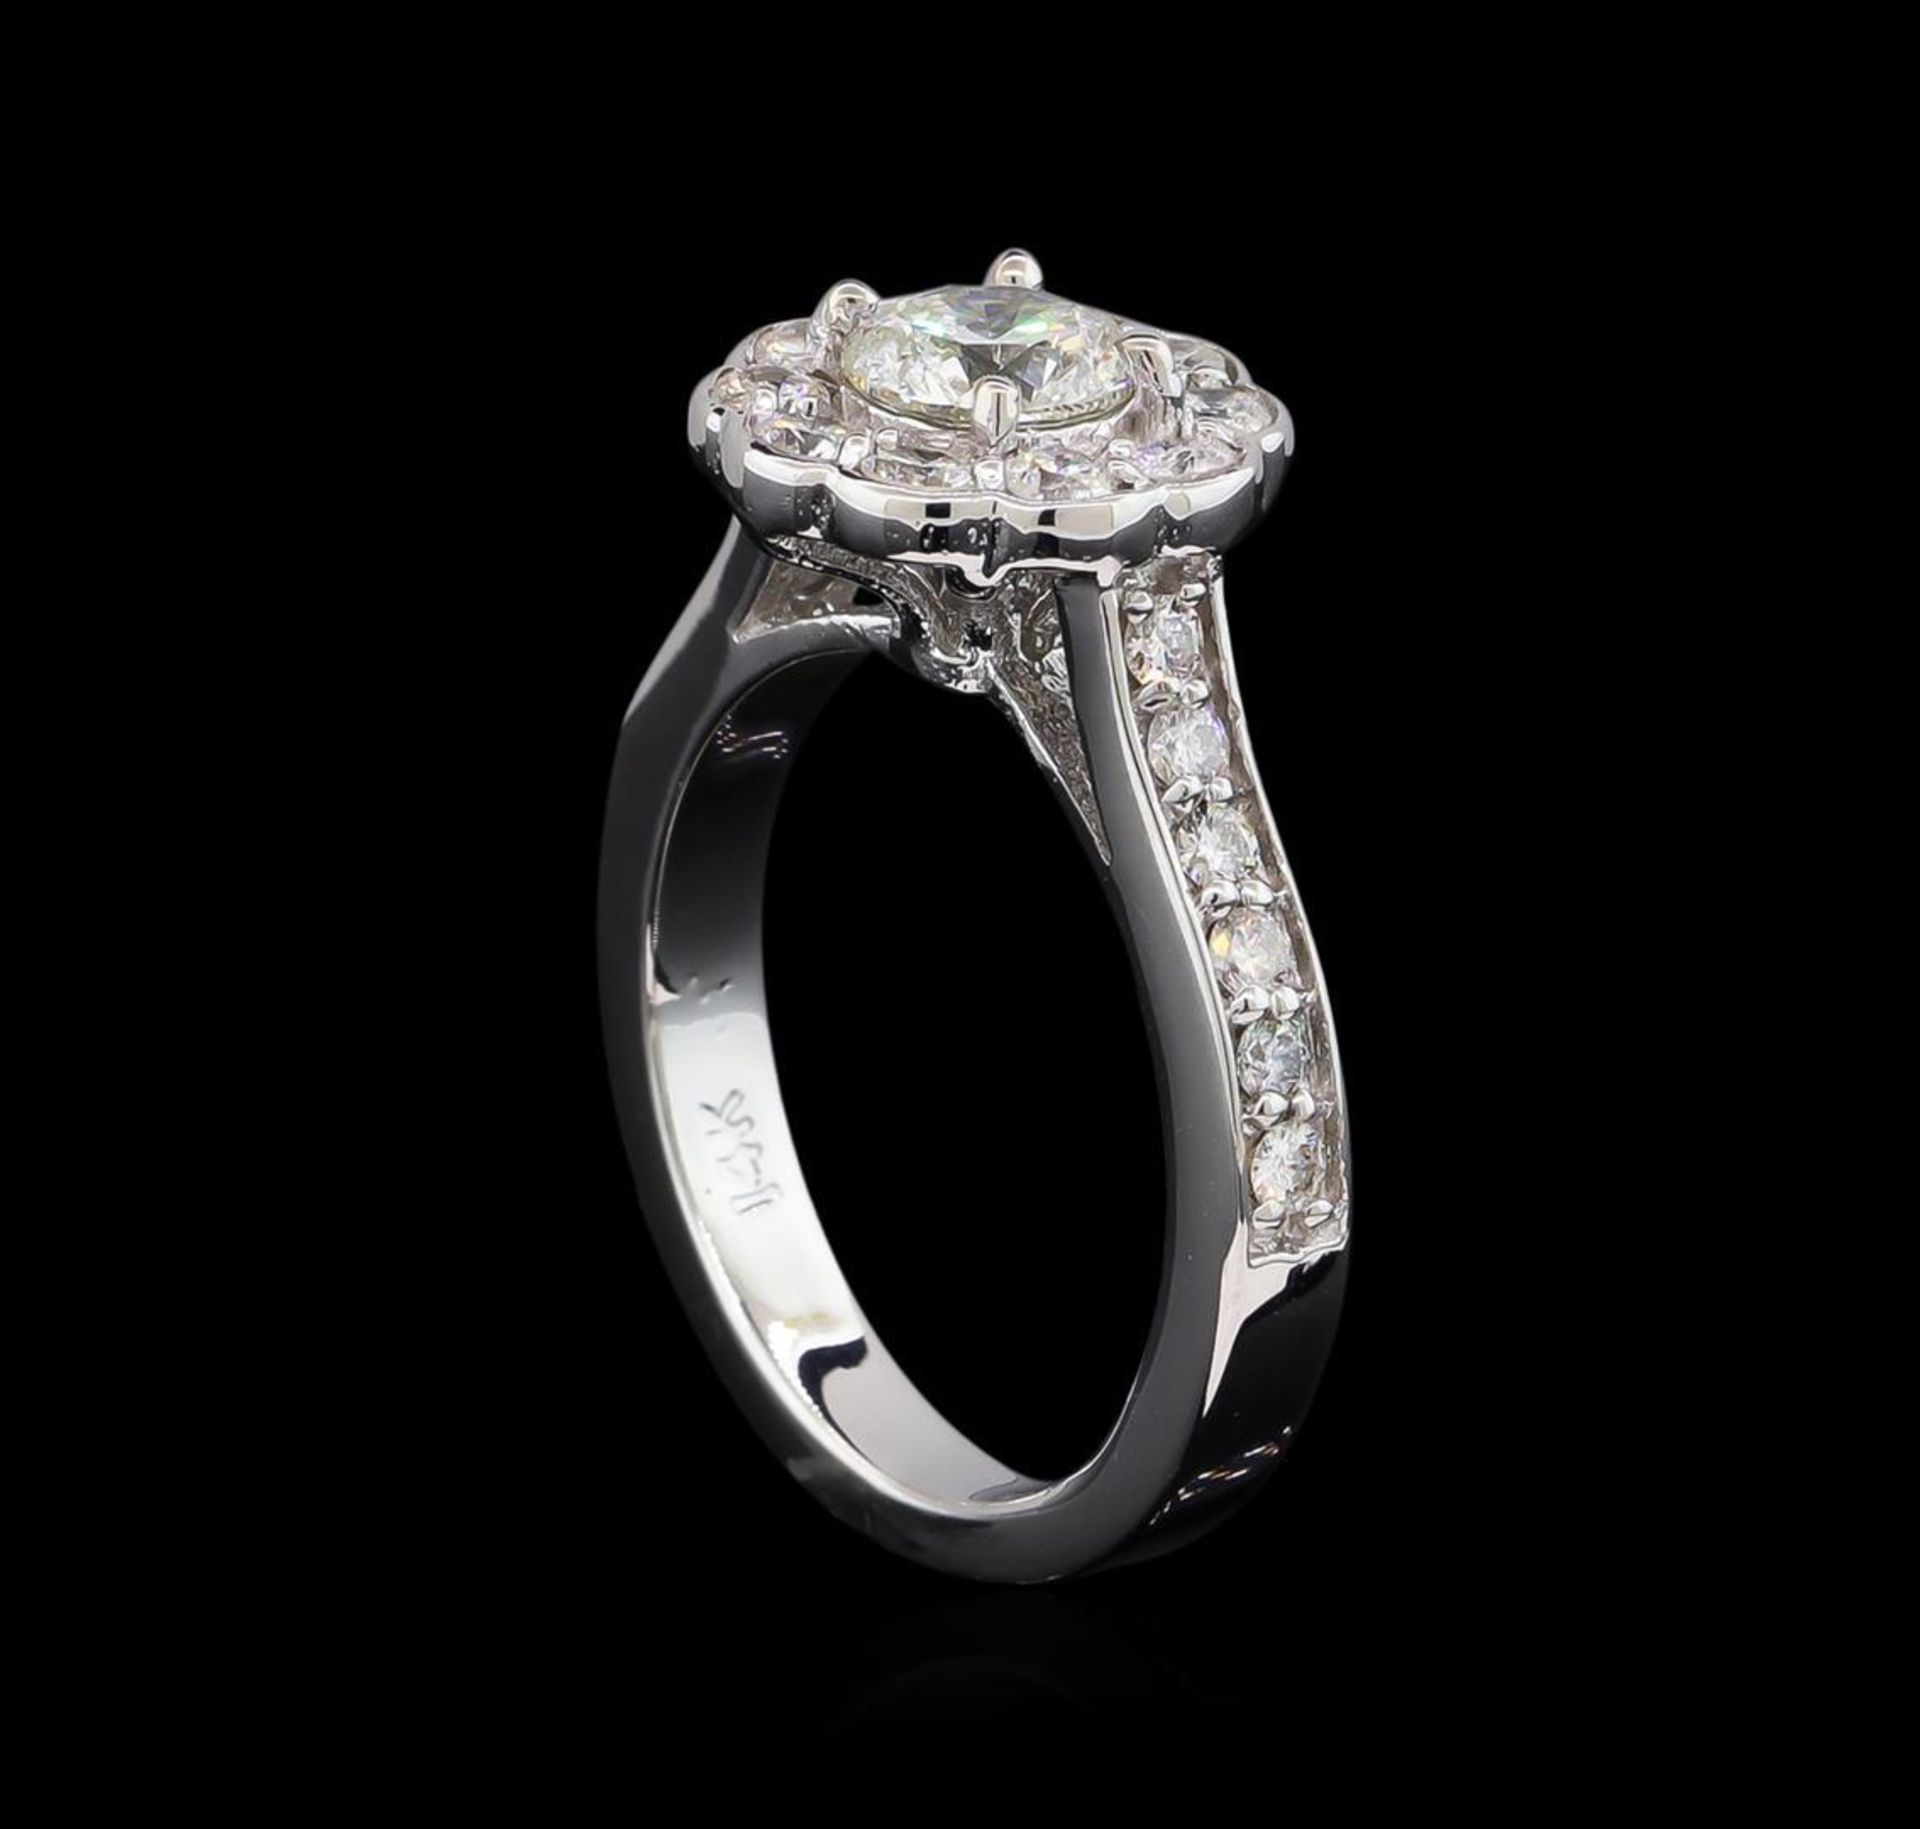 1.65 ctw Diamond Ring - 14KT White Gold - Image 4 of 5